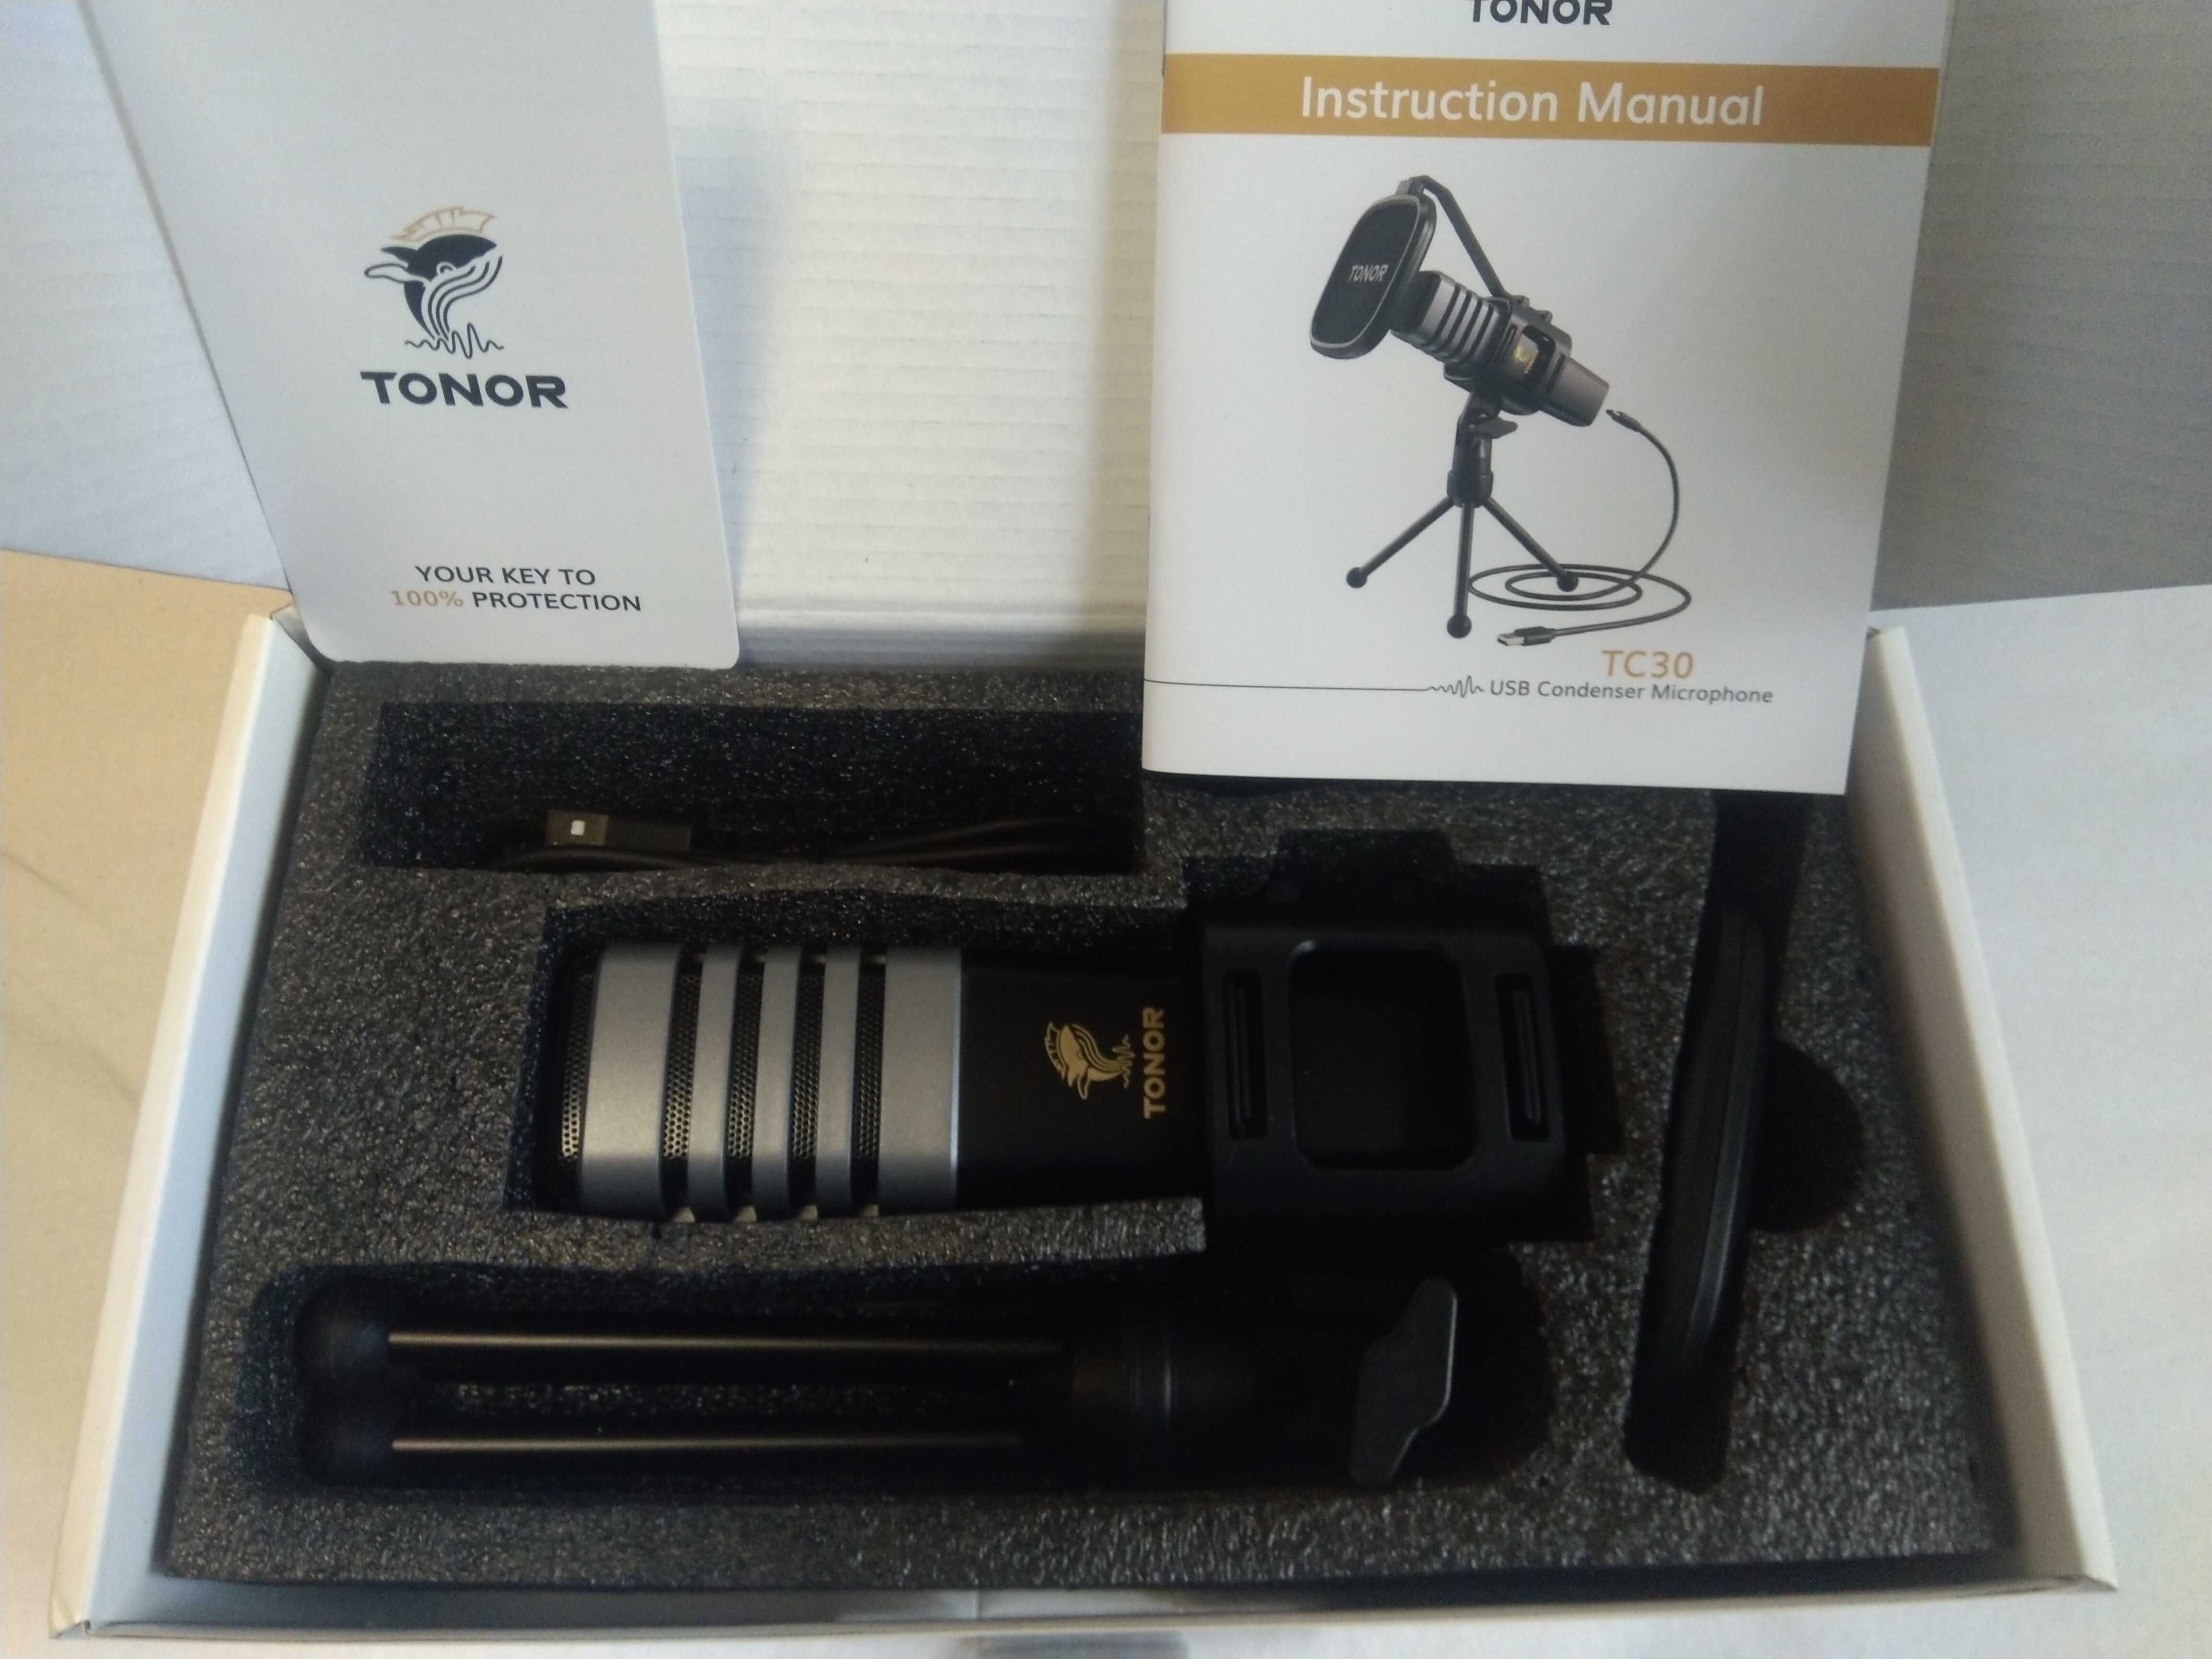 Mikrofon TONOR TC30 - pojemnościowy mikrofon USB do komputera